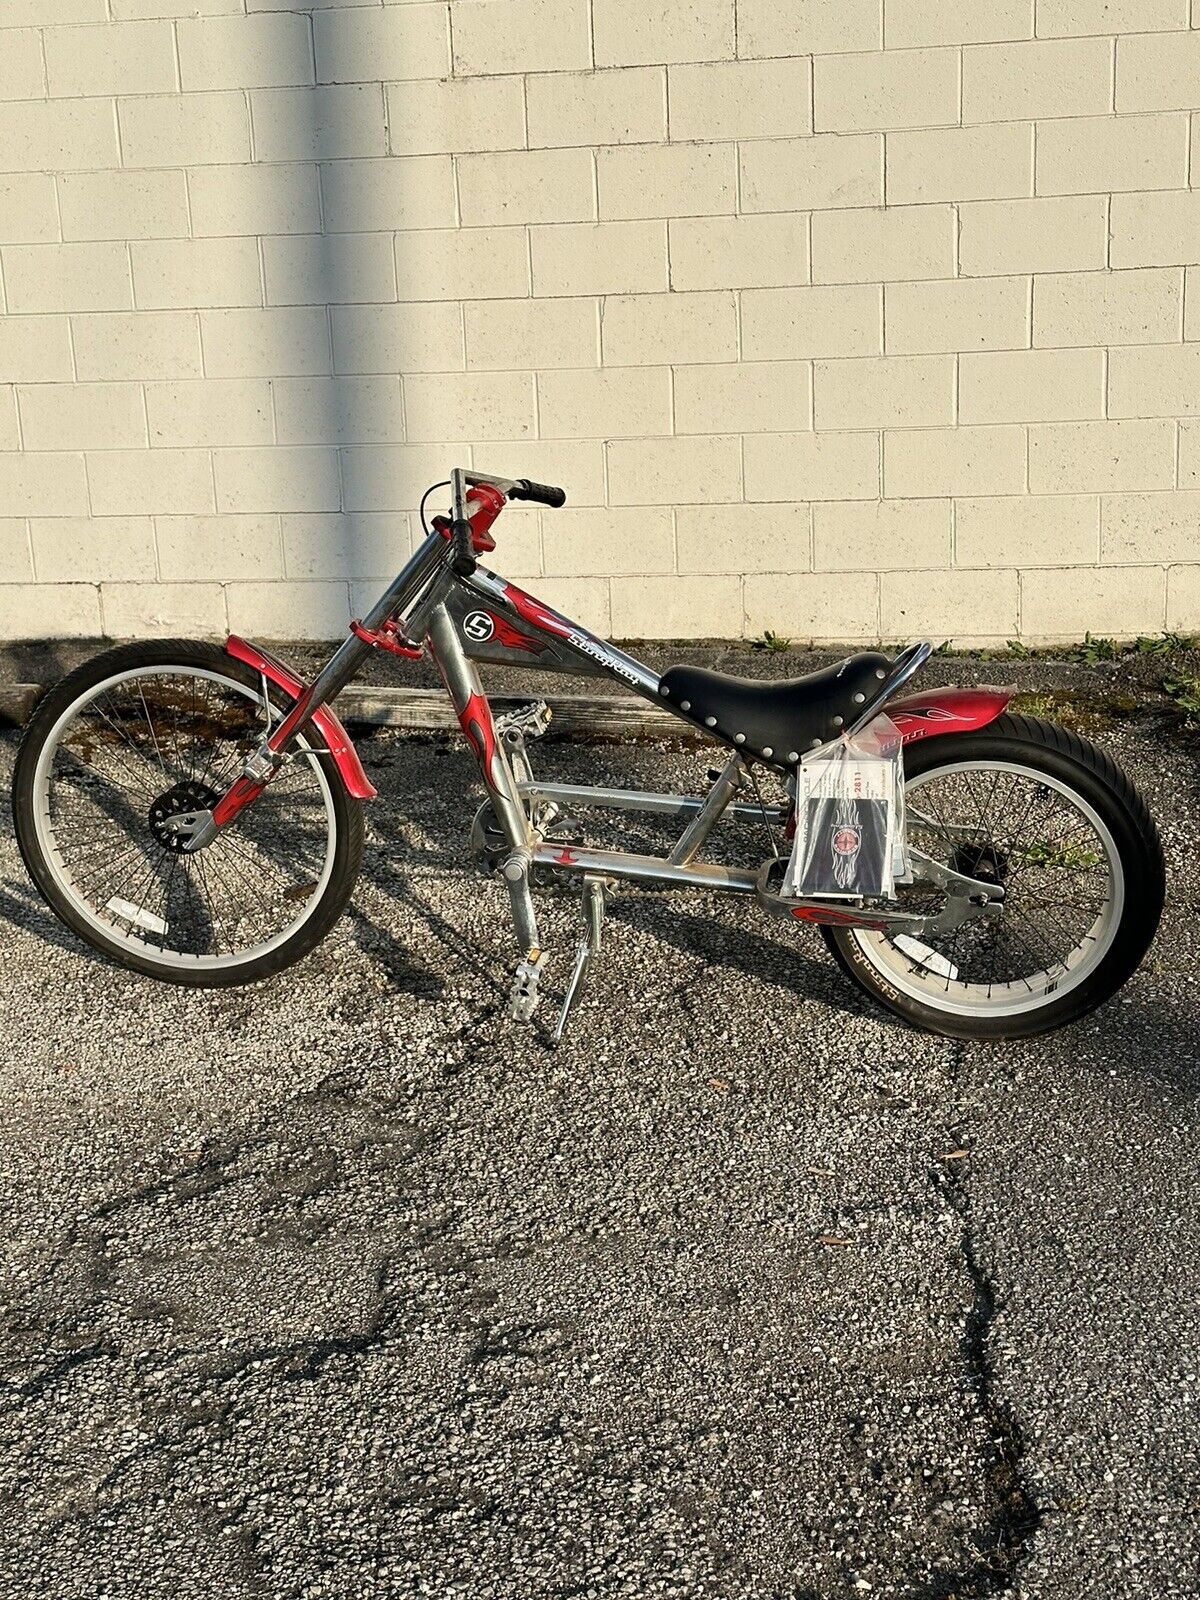 Red Schwin stingray orange county chopper bicycle OCC NEVER RIDEN